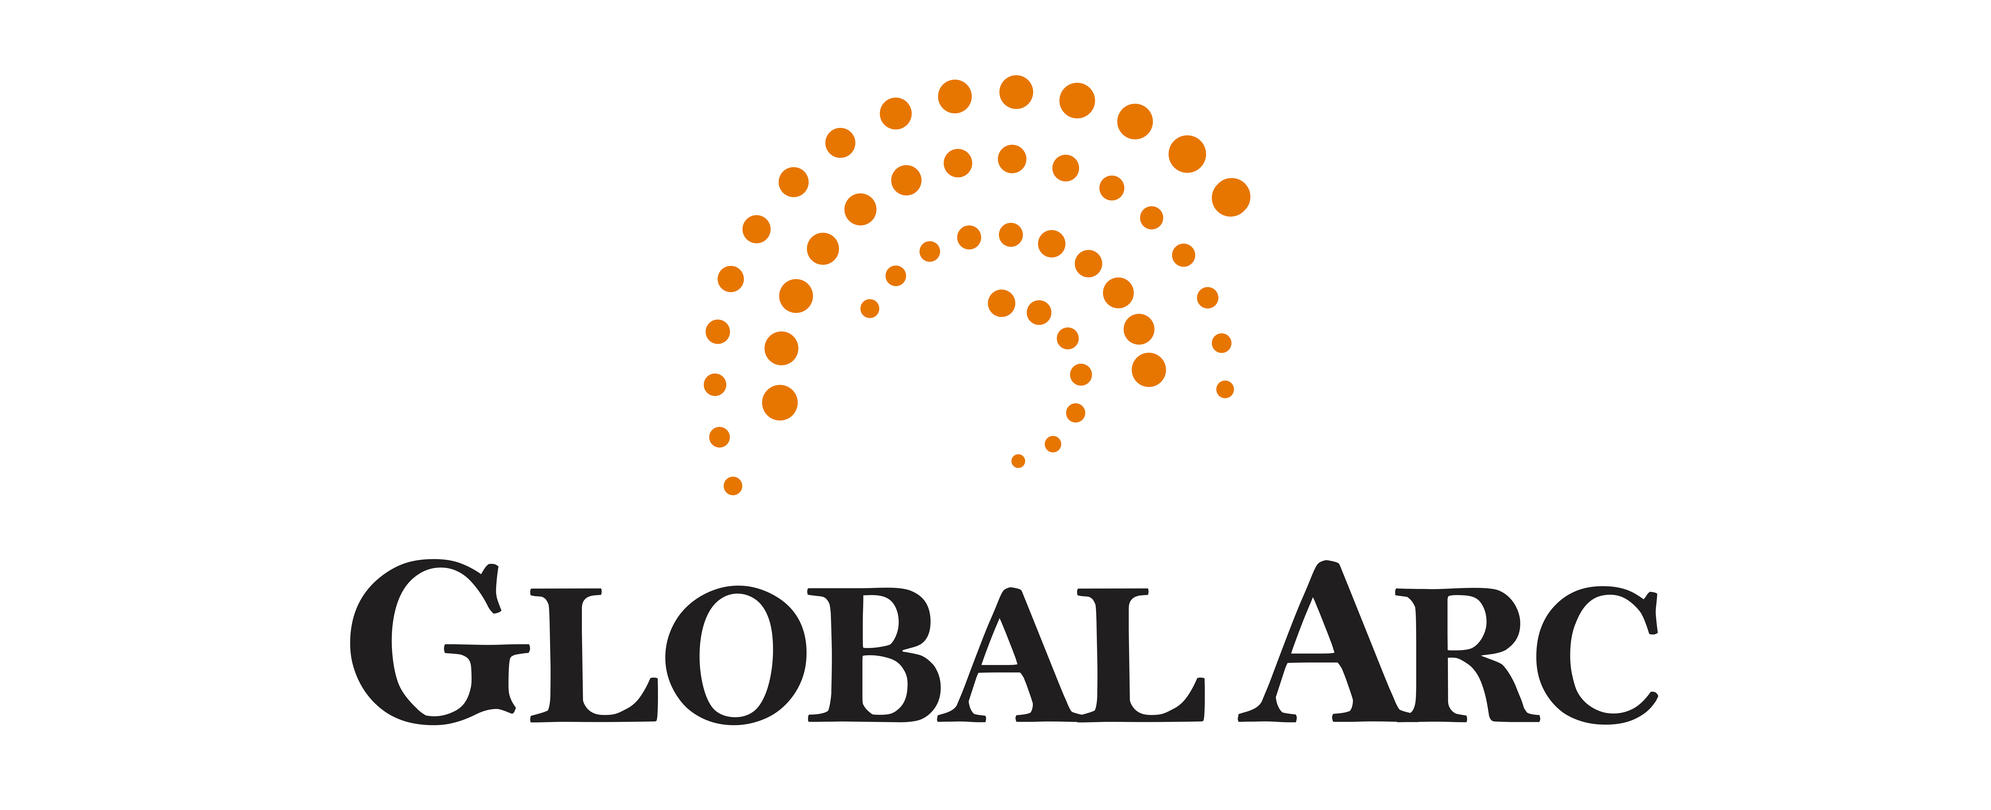 Global Arc Logo